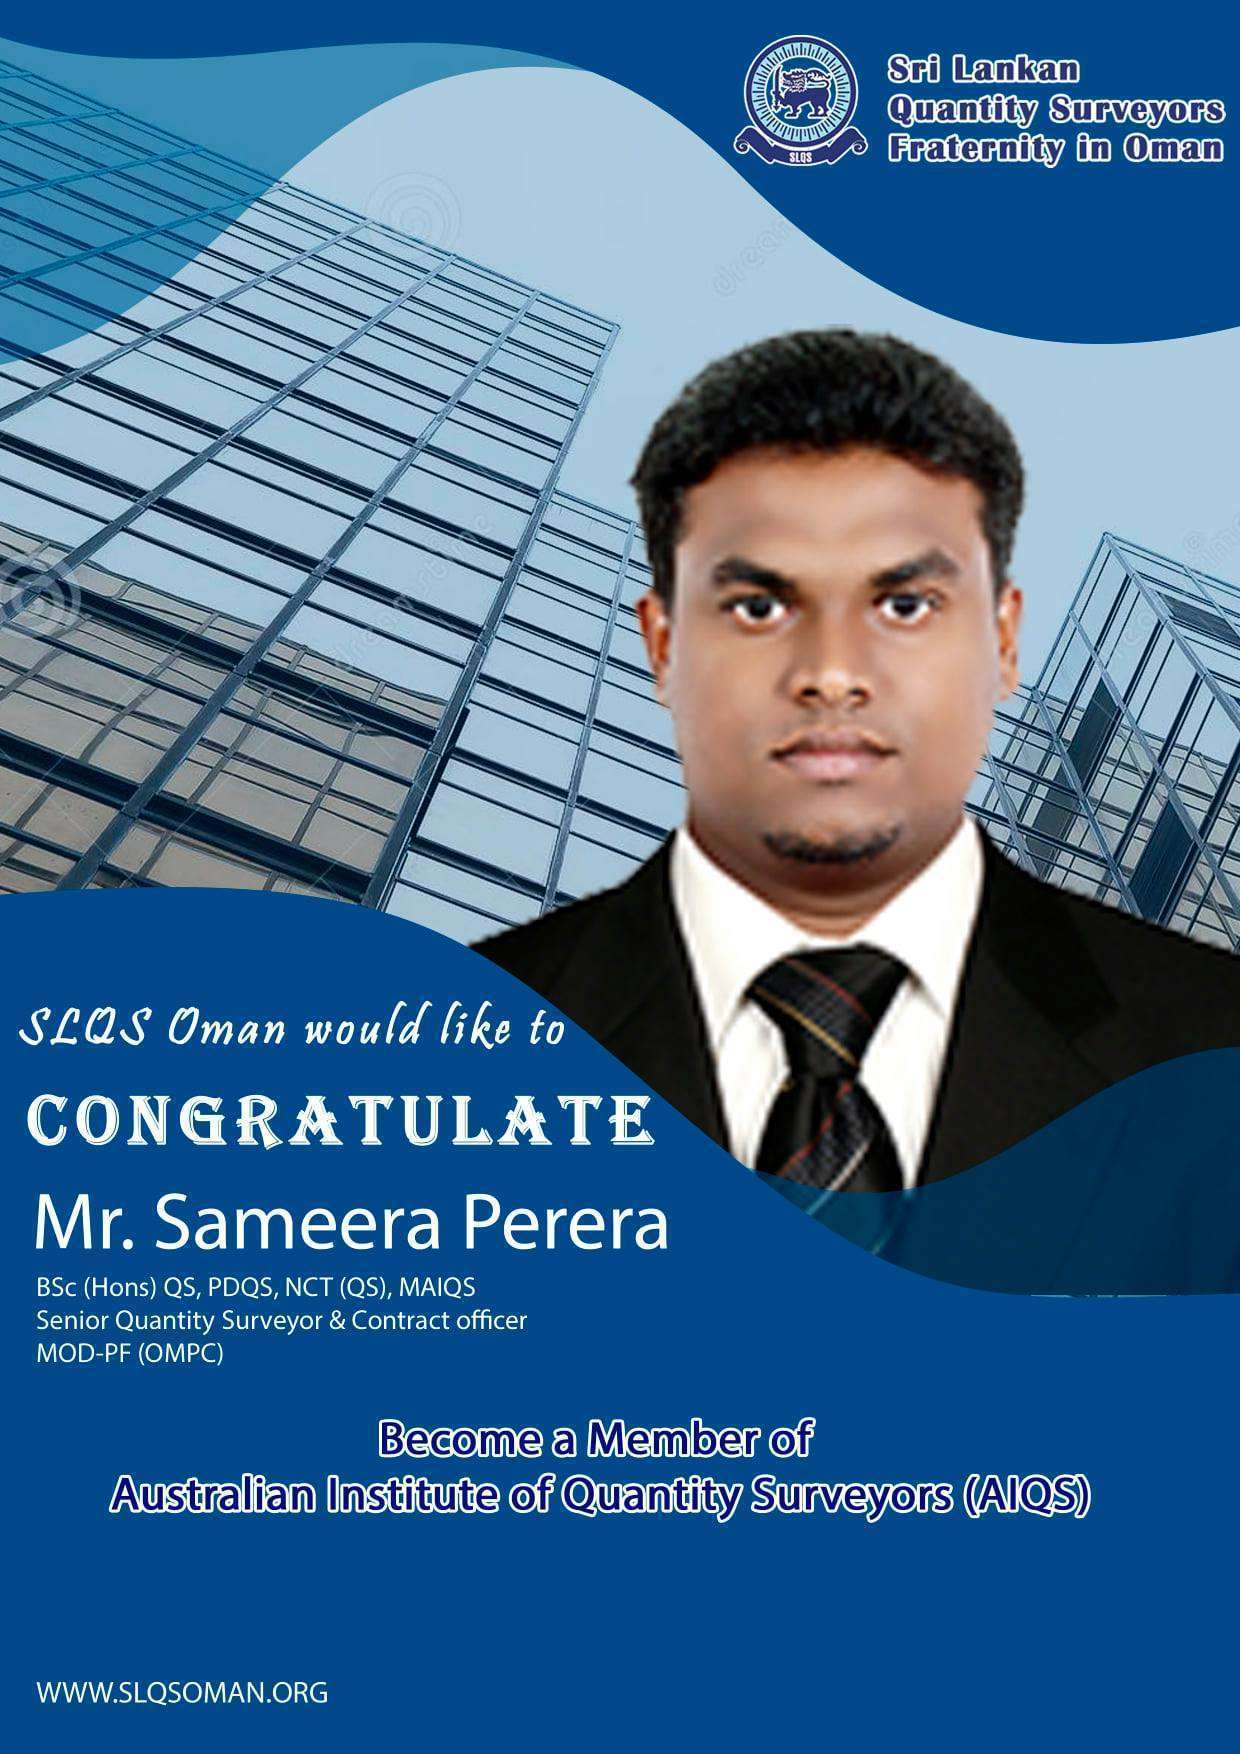 Congratulations Mr. Sameera Perera !! For achieving member of AIQS